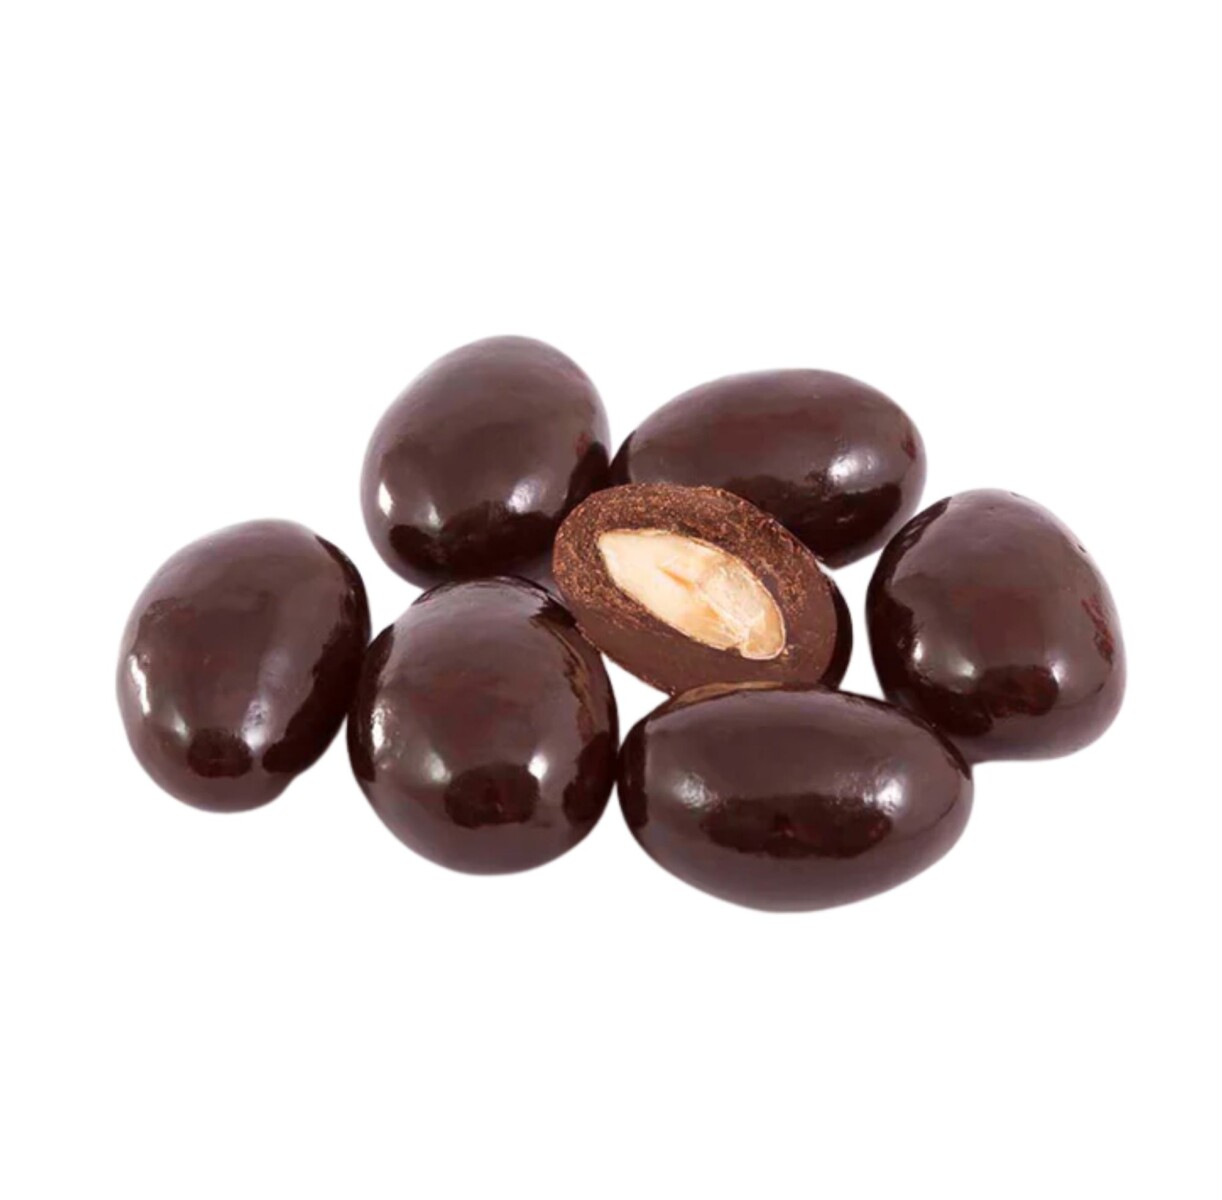 Almendras con chocolate semi amargo sin azúcar 100g 